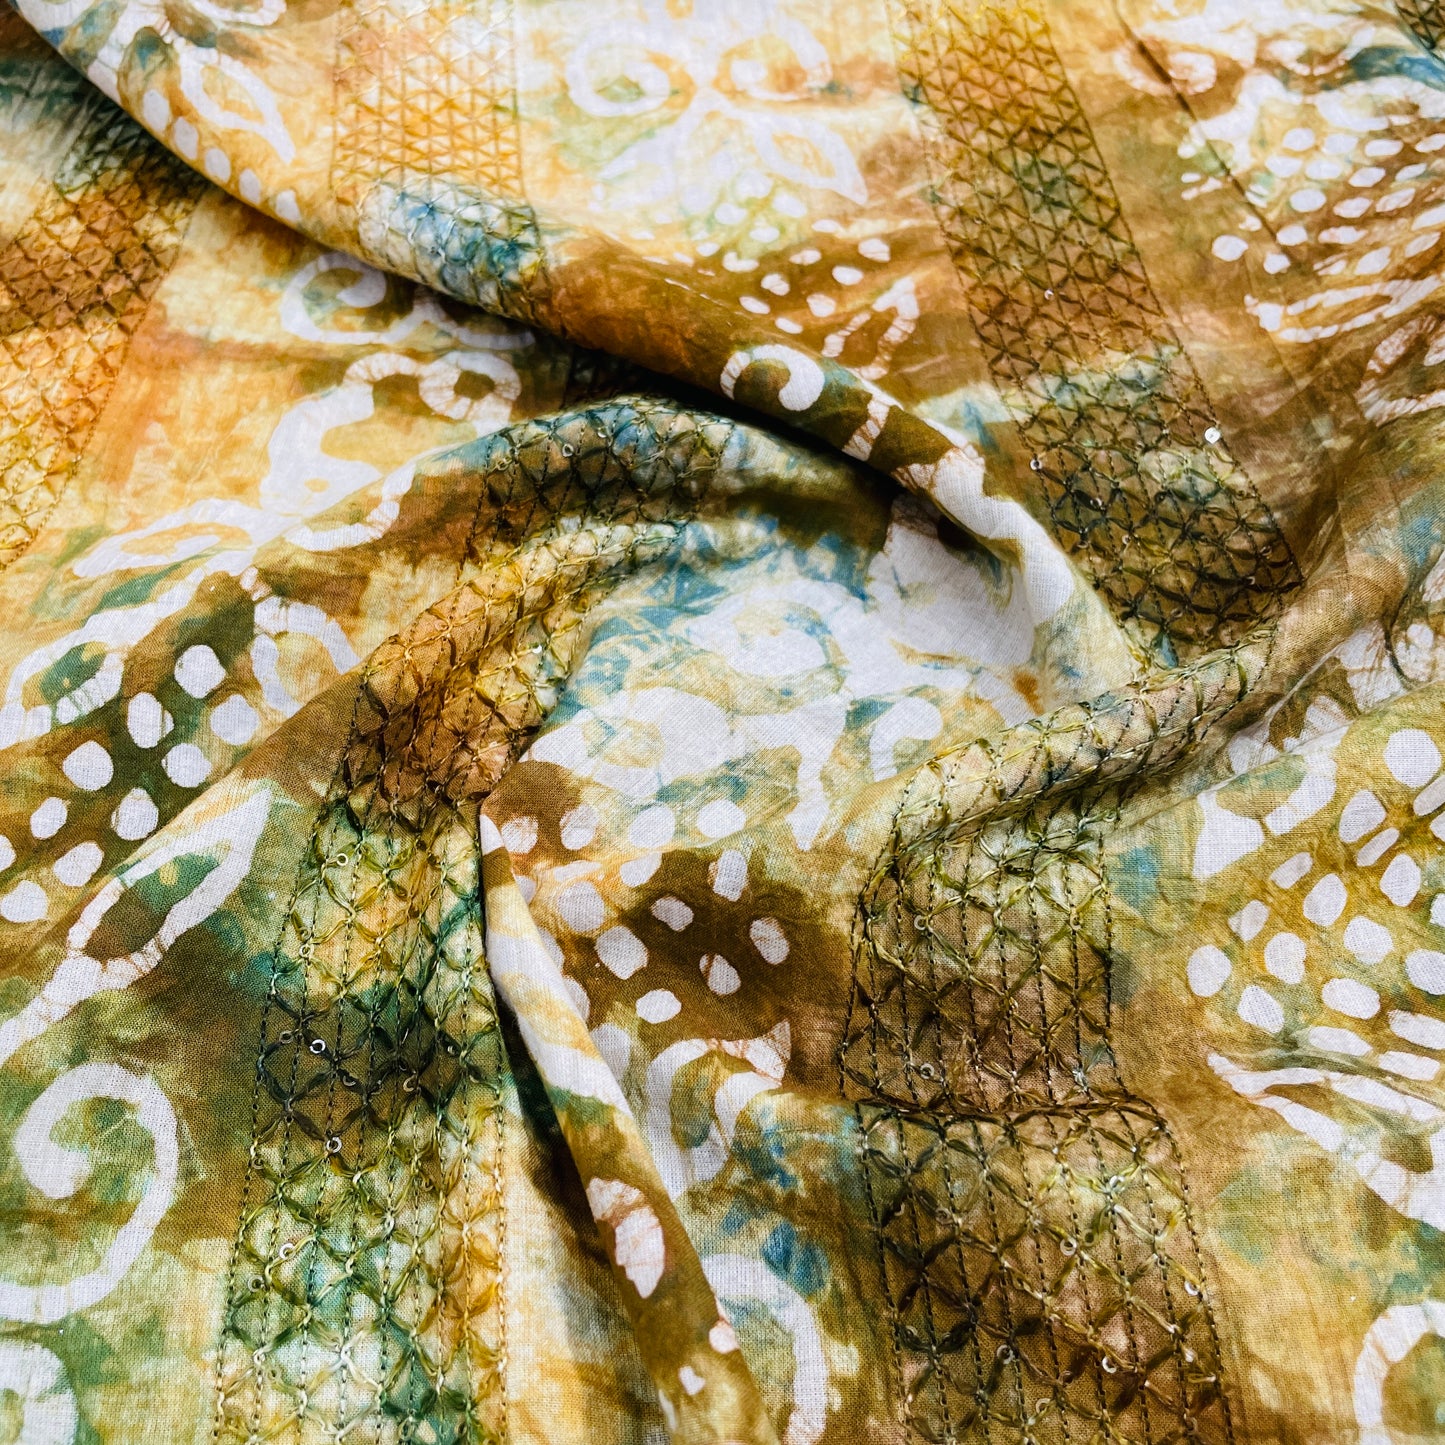 Orange Batik Print Sequence Embroidery Cotton Fabric - TradeUNO